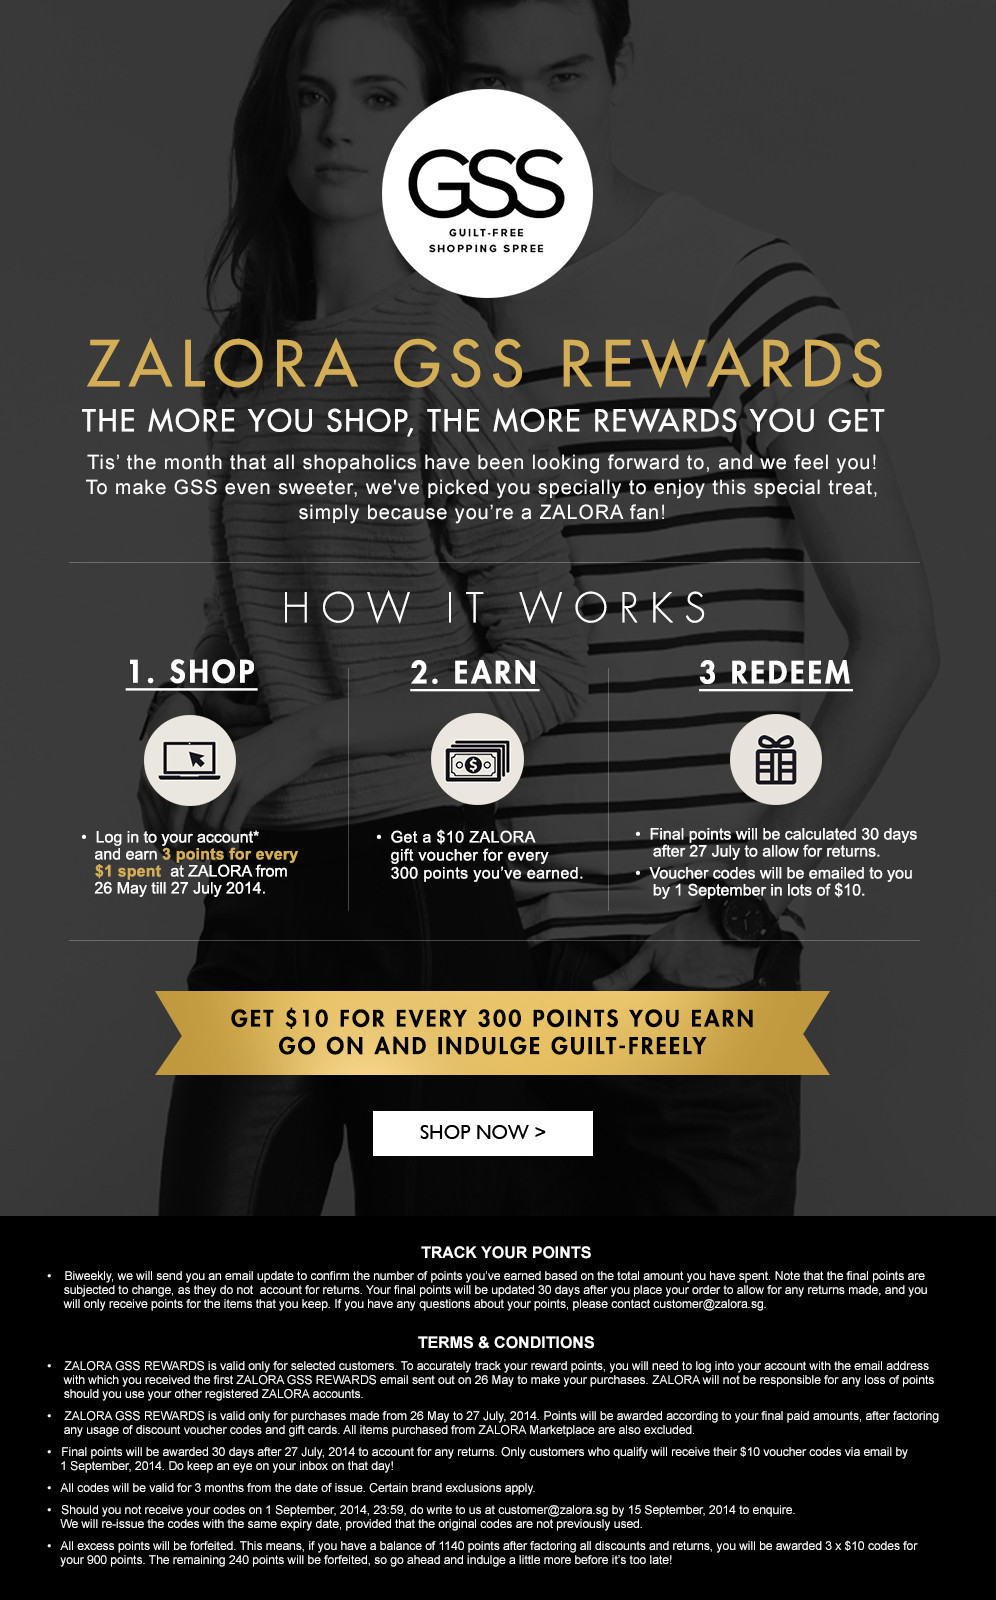 Zalora GSS Rewards